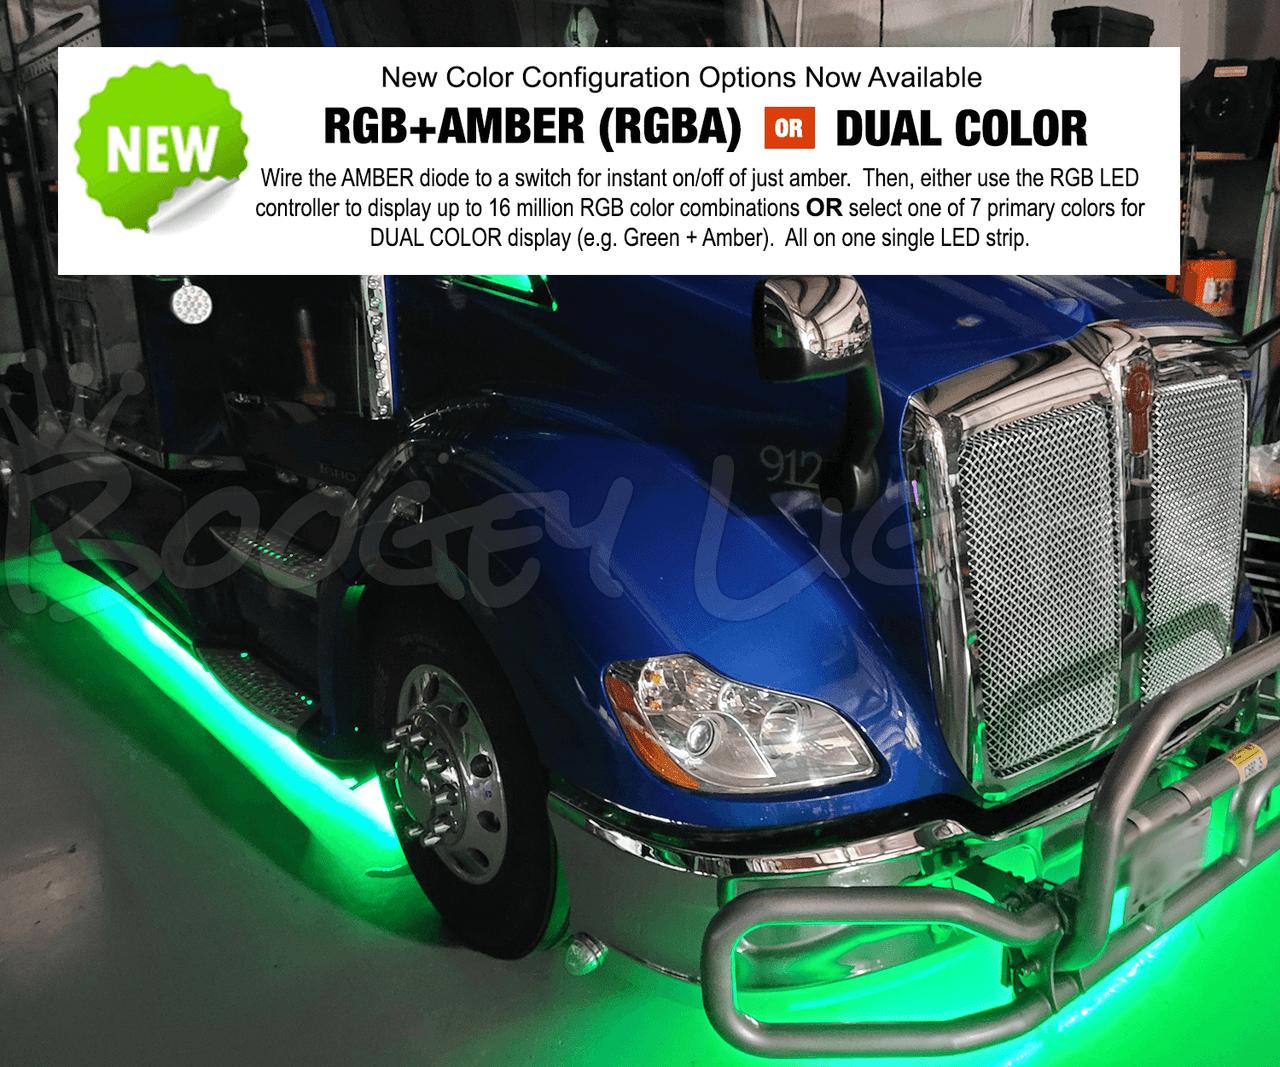 Exterior Car LED Lights - Multicolor 2 Pcs 24 inches Daytime Running  Lights, RGB Flexible LED Strip Light Kits 